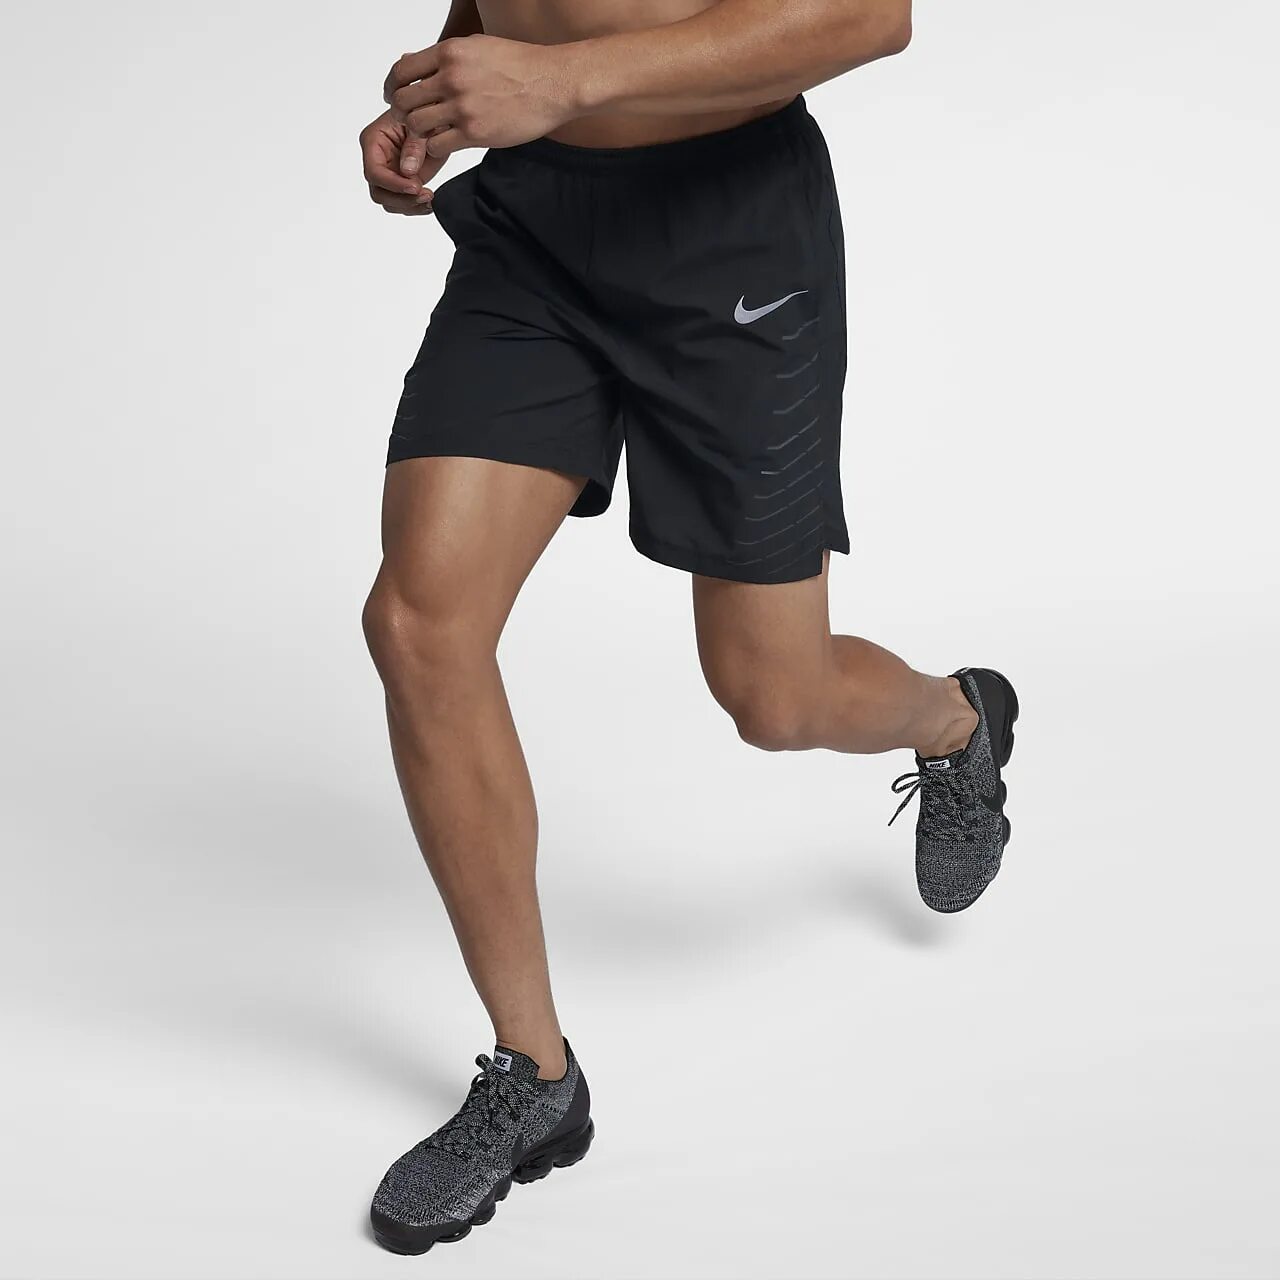 Шорты run. Шорты Nike Challenger. Nike Running Challenger шорты. Шорты Nike Challenger бег. Nike Running Division шорты мужские.